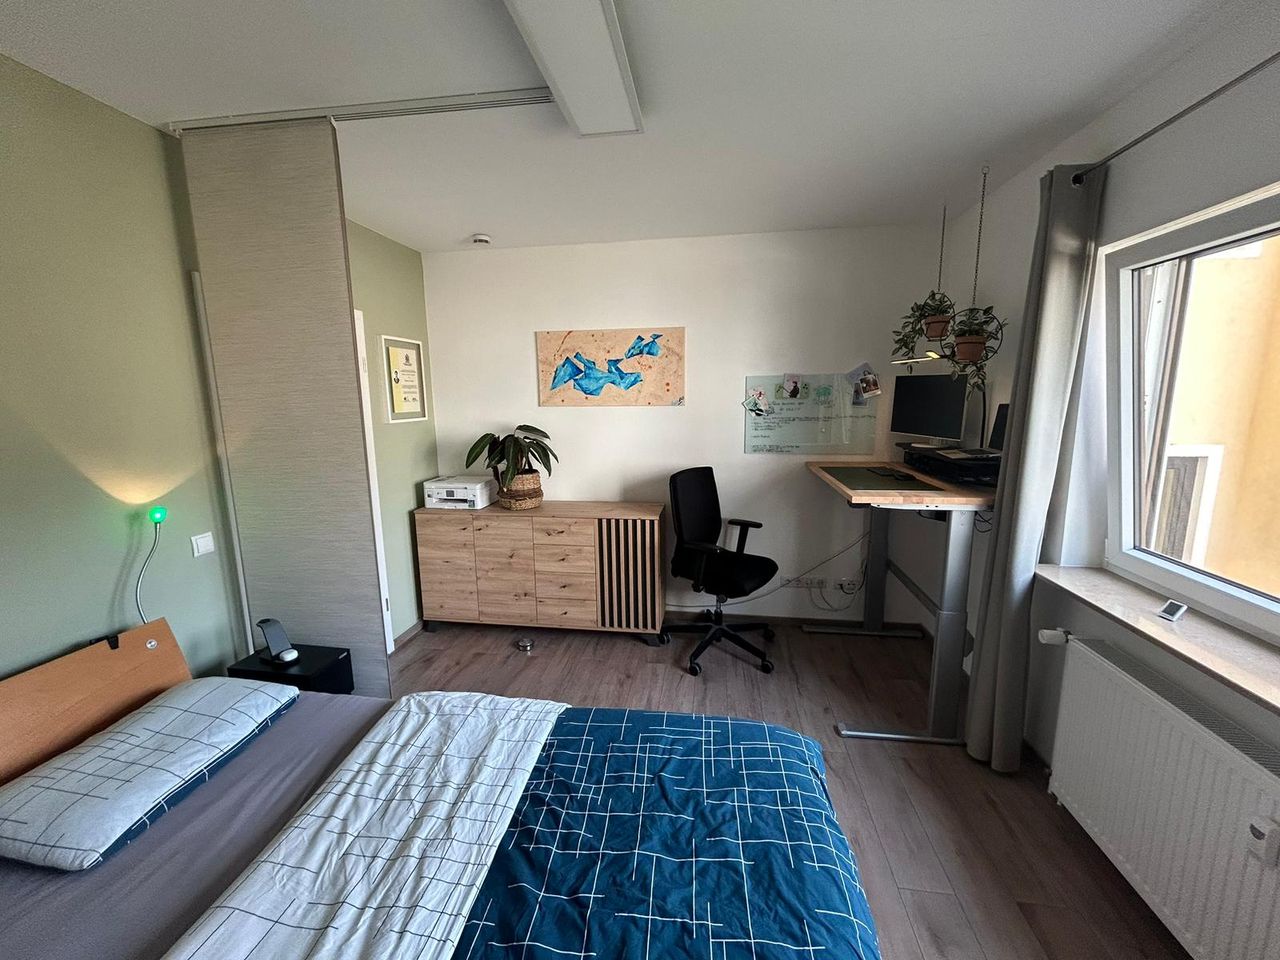 Modern flat in Wiesbaden fully furnished